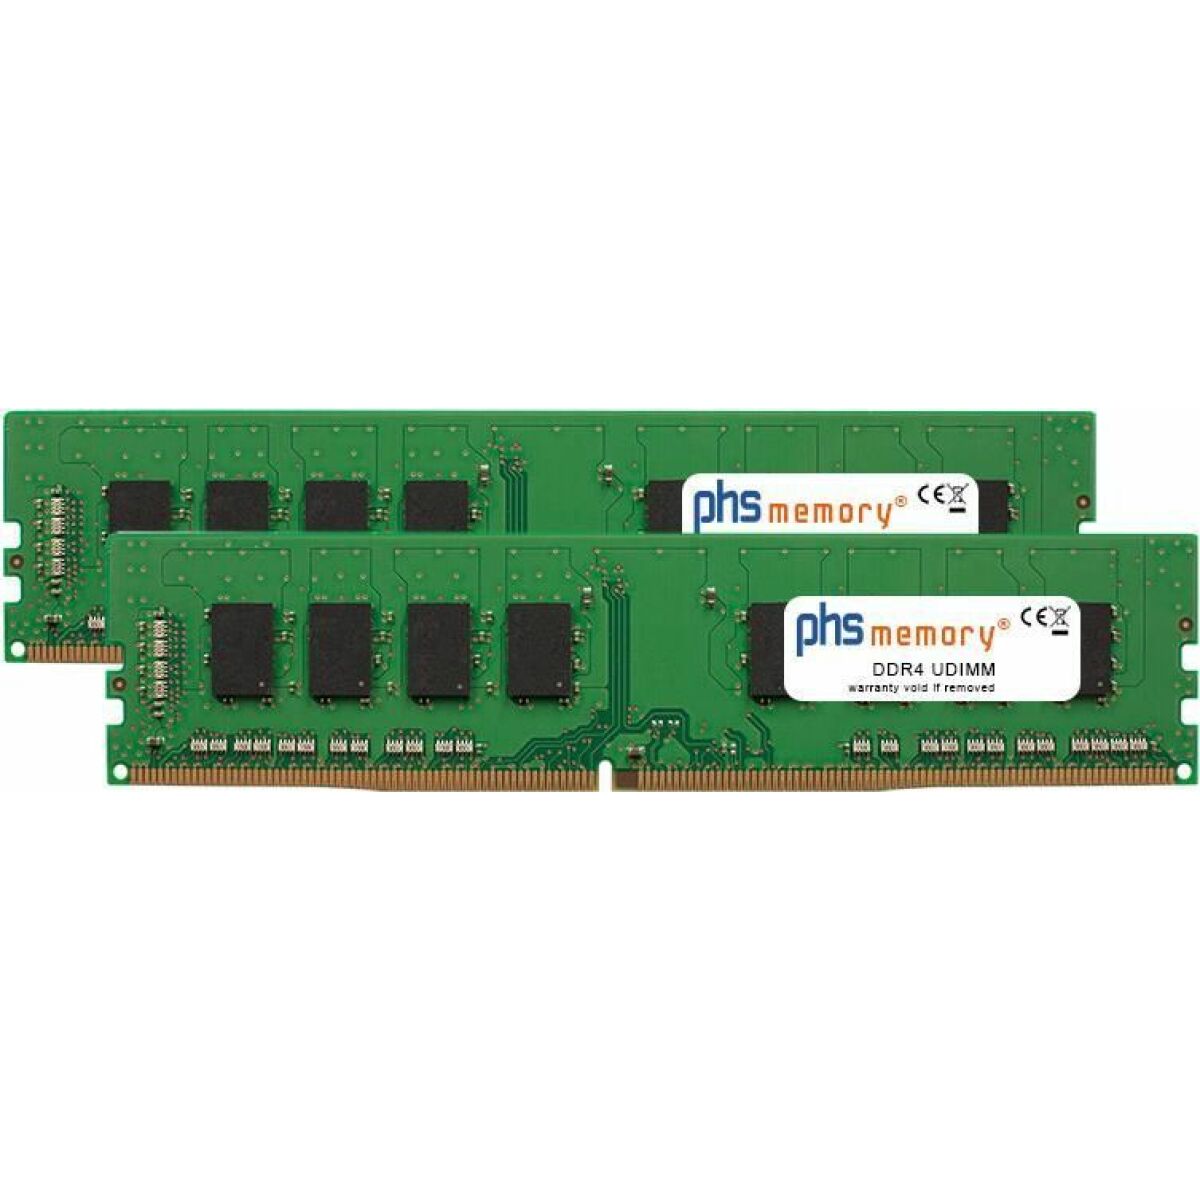 PHS-memory 16GB (2x8GB) Kit RAM Speicher DDR4 UDIMM 3200MHz PC4-25600-U 288 Pin DIMM 1,2 Volt (SP368305)